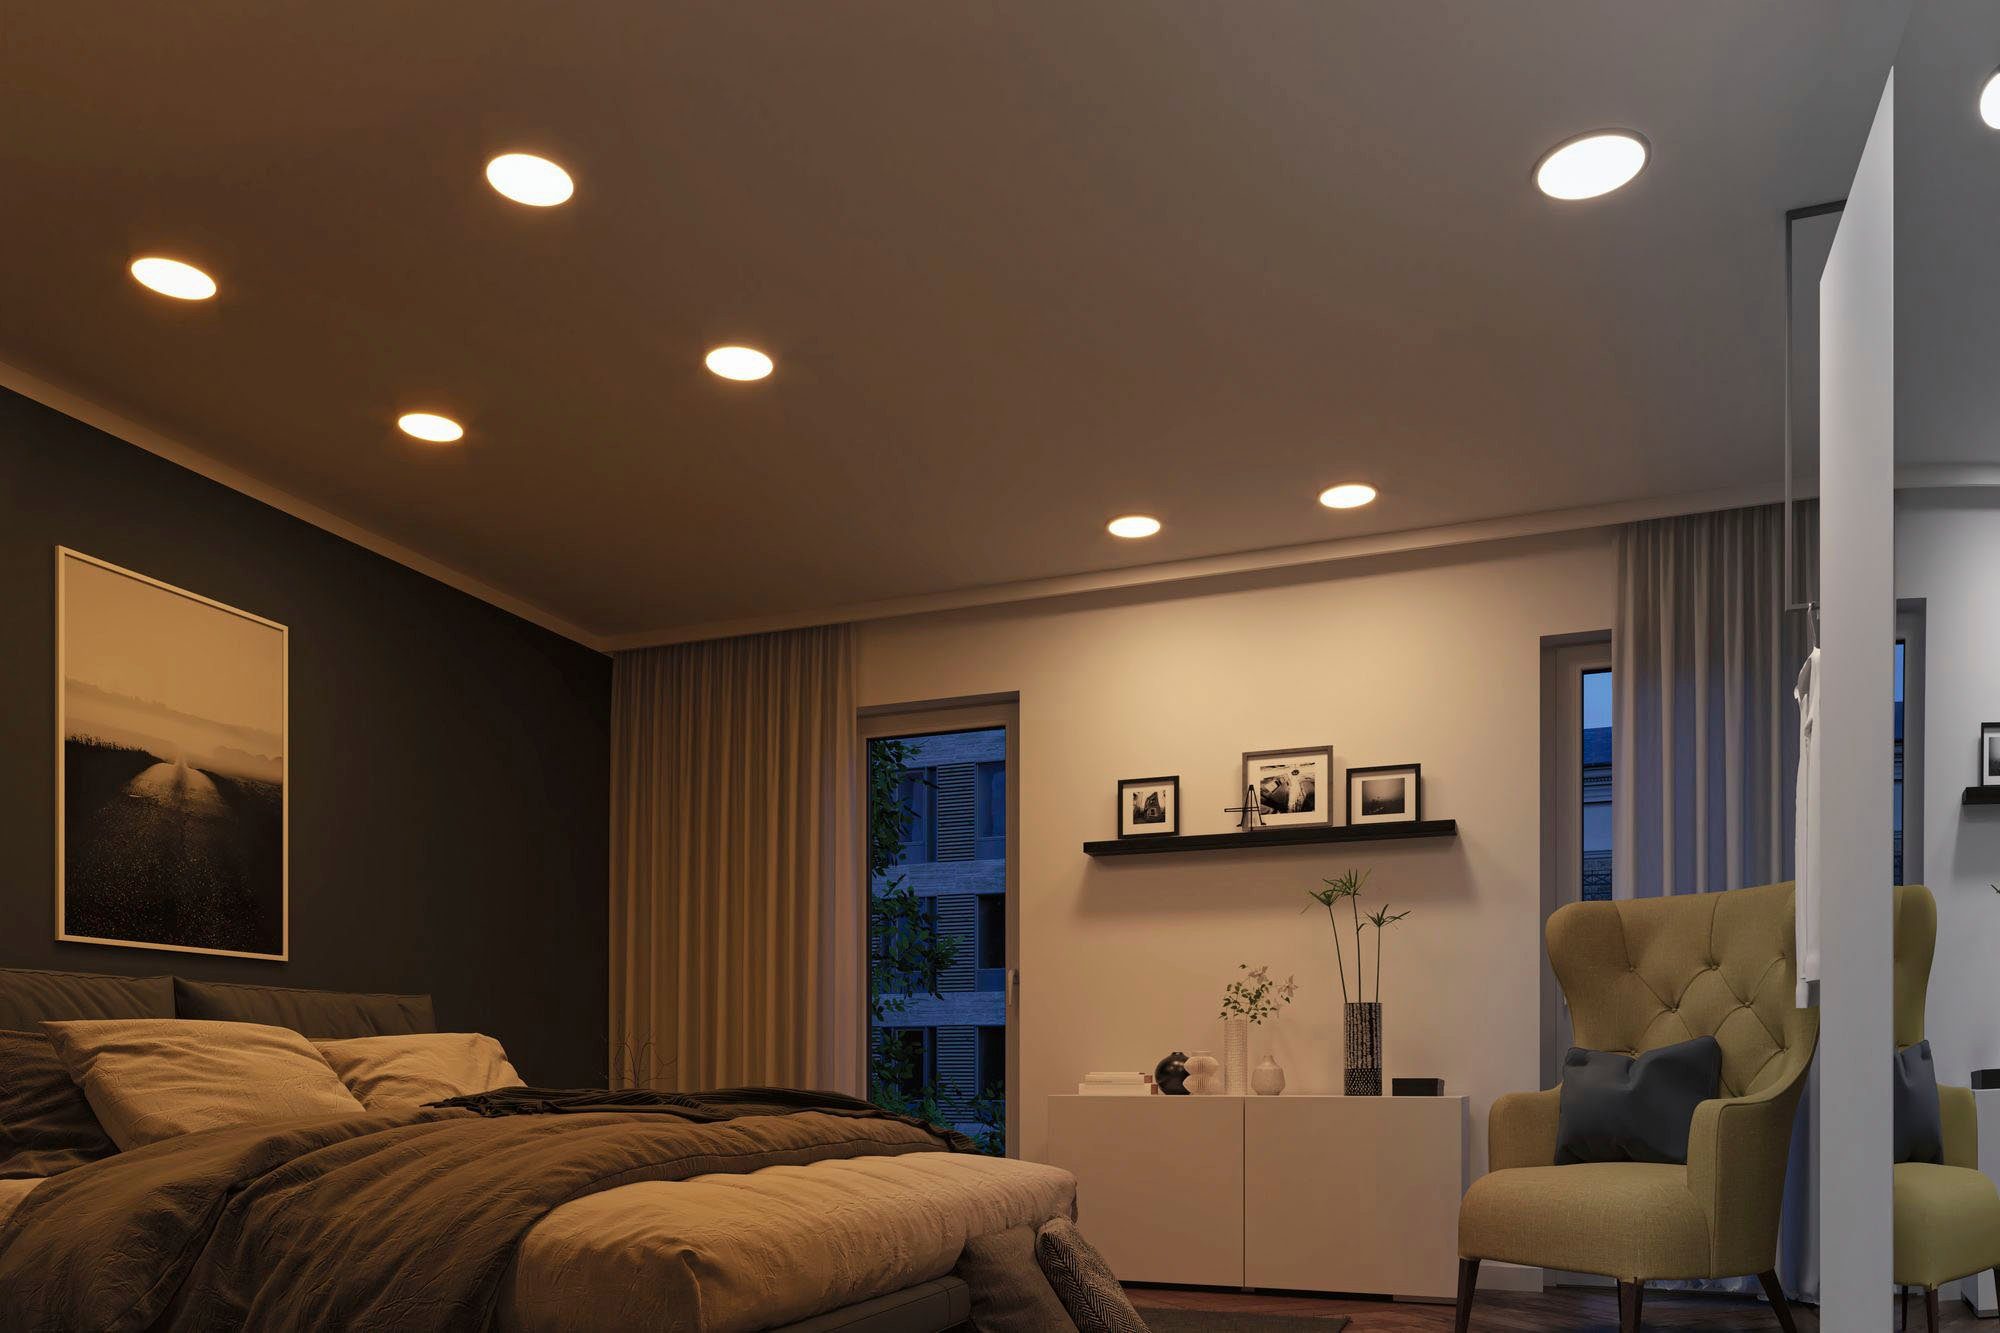 Weiß Tunable Paulmann Smart Einbauleuchte LED warmweiß fest - Home, Areo, White LED integriert, LED-Modul, kaltweiß,